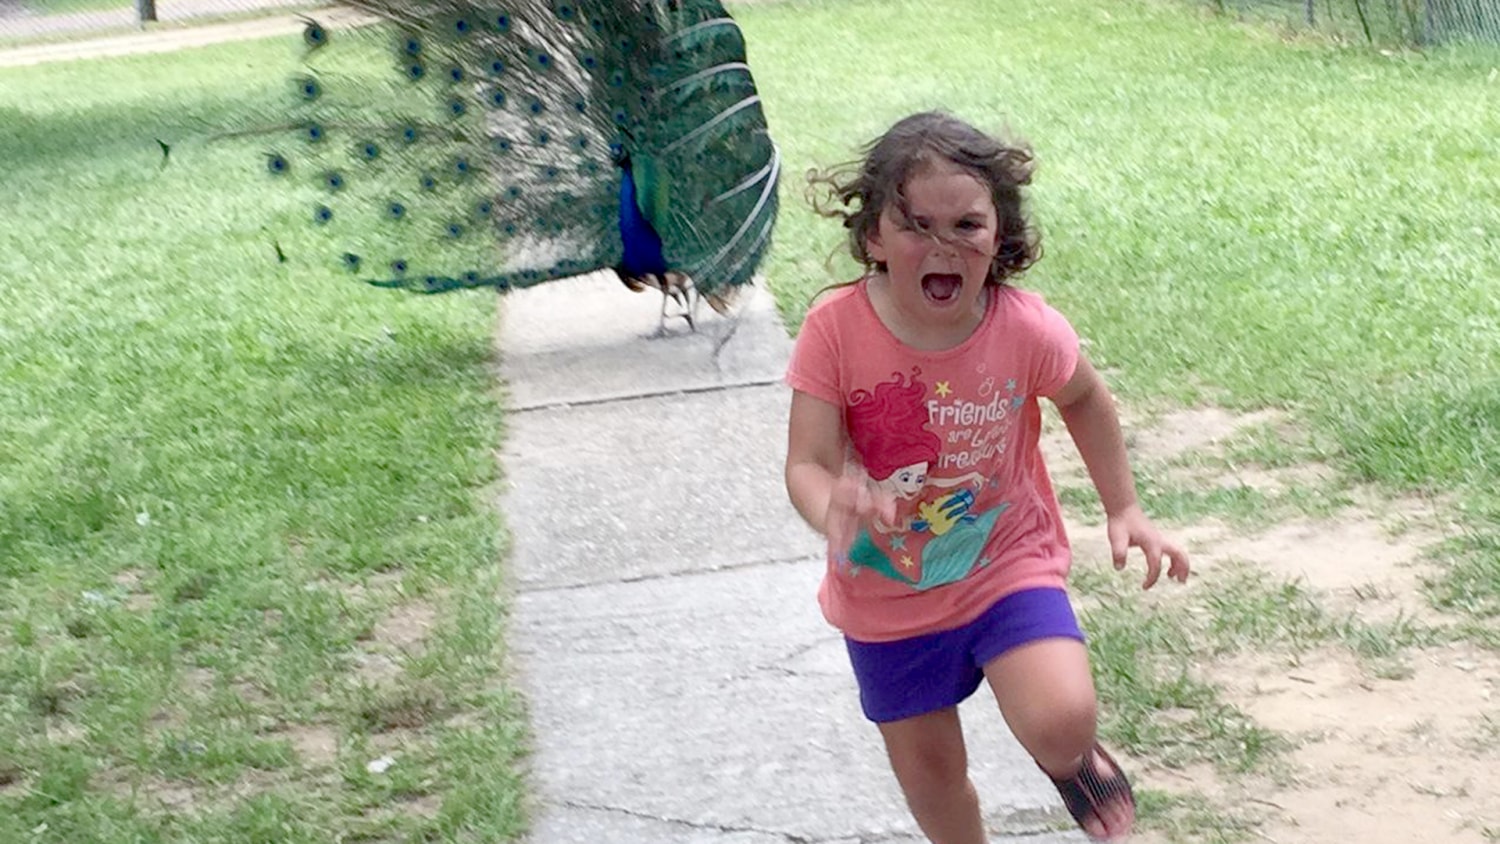 Run! Internet has fun Photoshopping girl sprinting from peacock